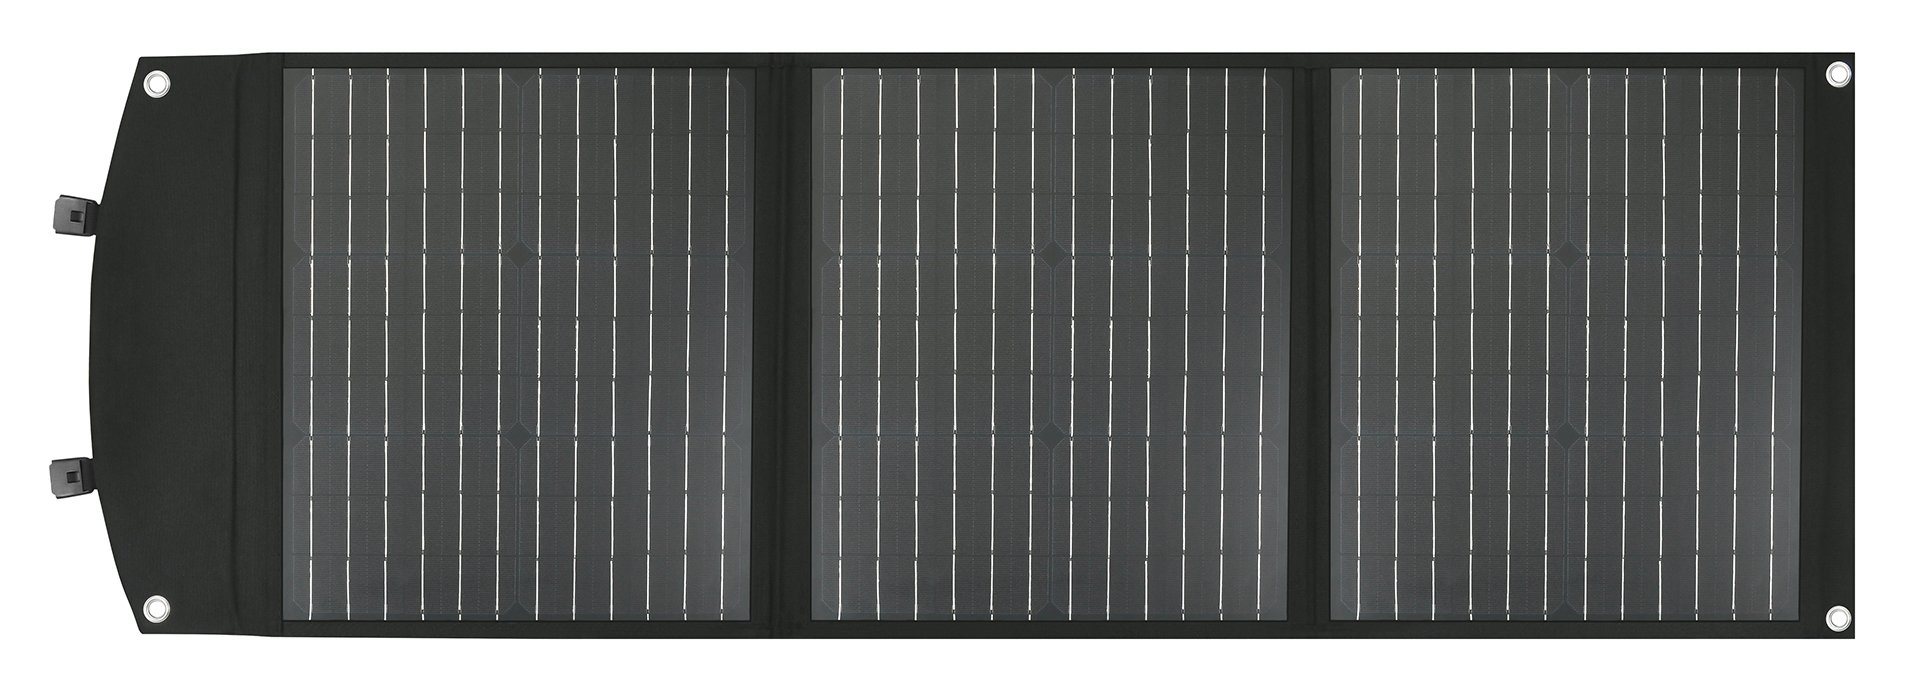 Cargador de panel solar plegable / Panel solar monocristalino para mascotas 75W Tela a prueba de agua / Chip de carga inteligente